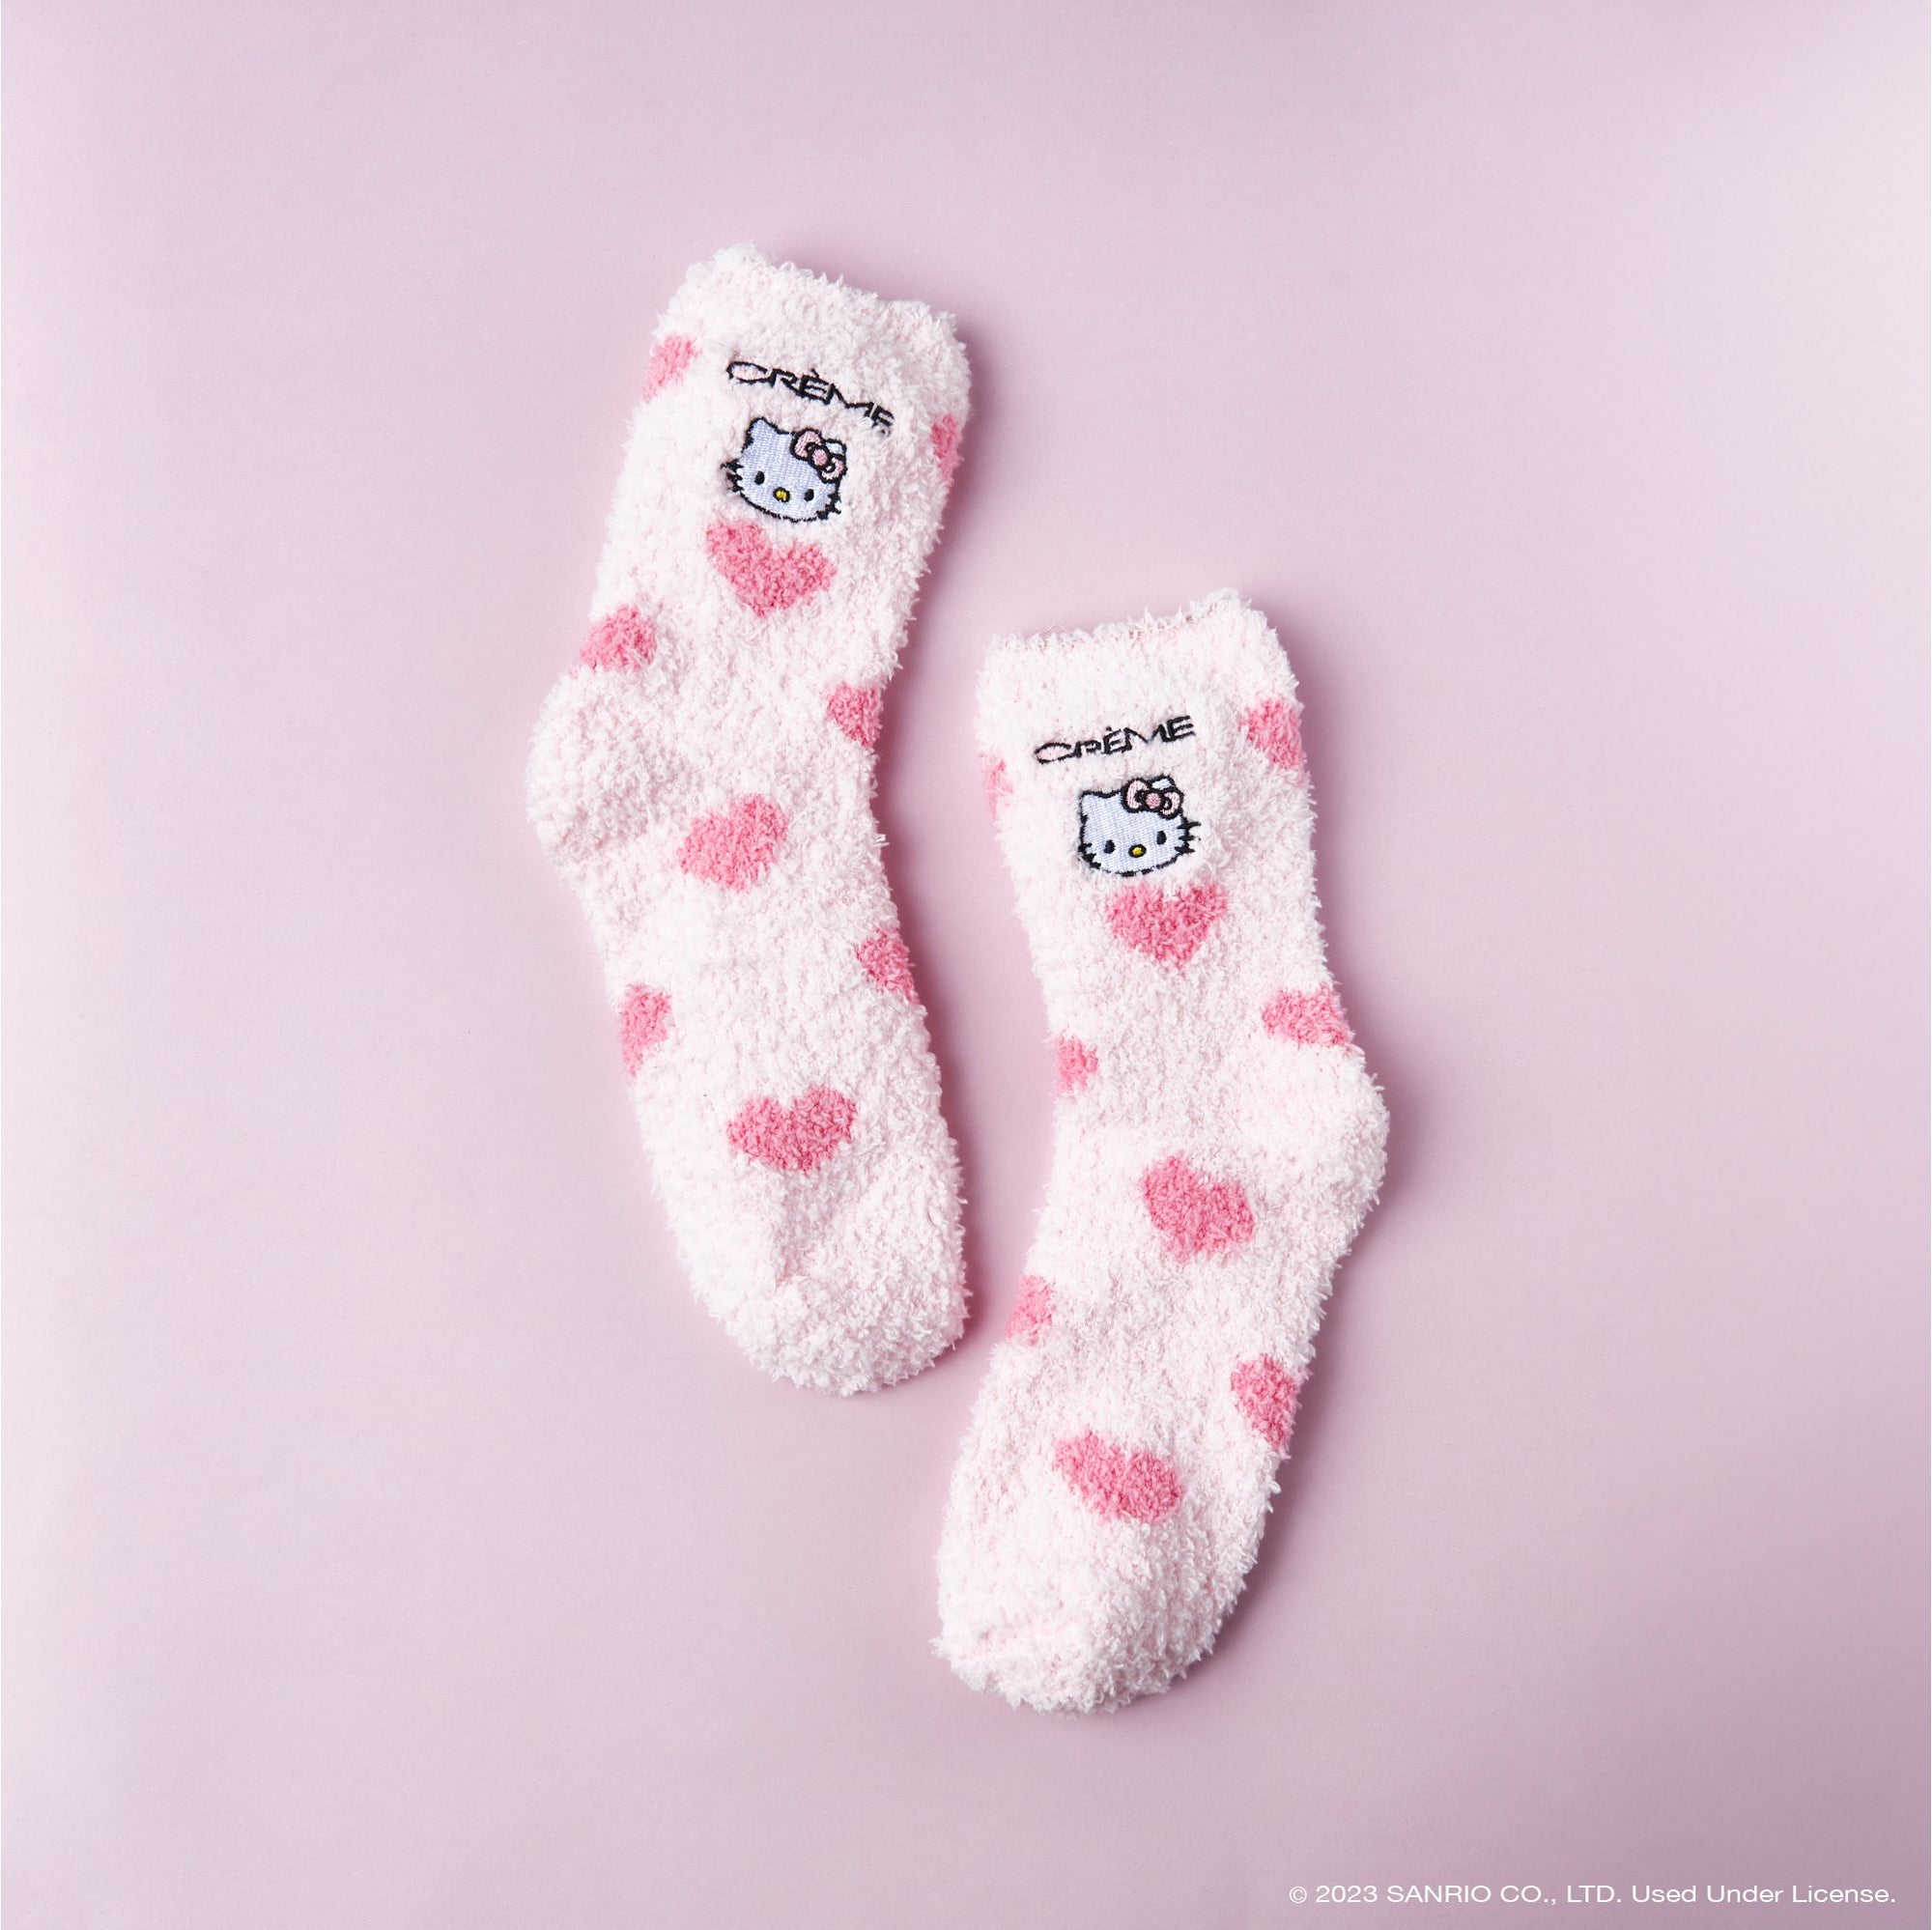 Hello Kitty Sole Soft! Infused Cozy Socks - Sweetheart Socks The Crème Shop x Sanrio 